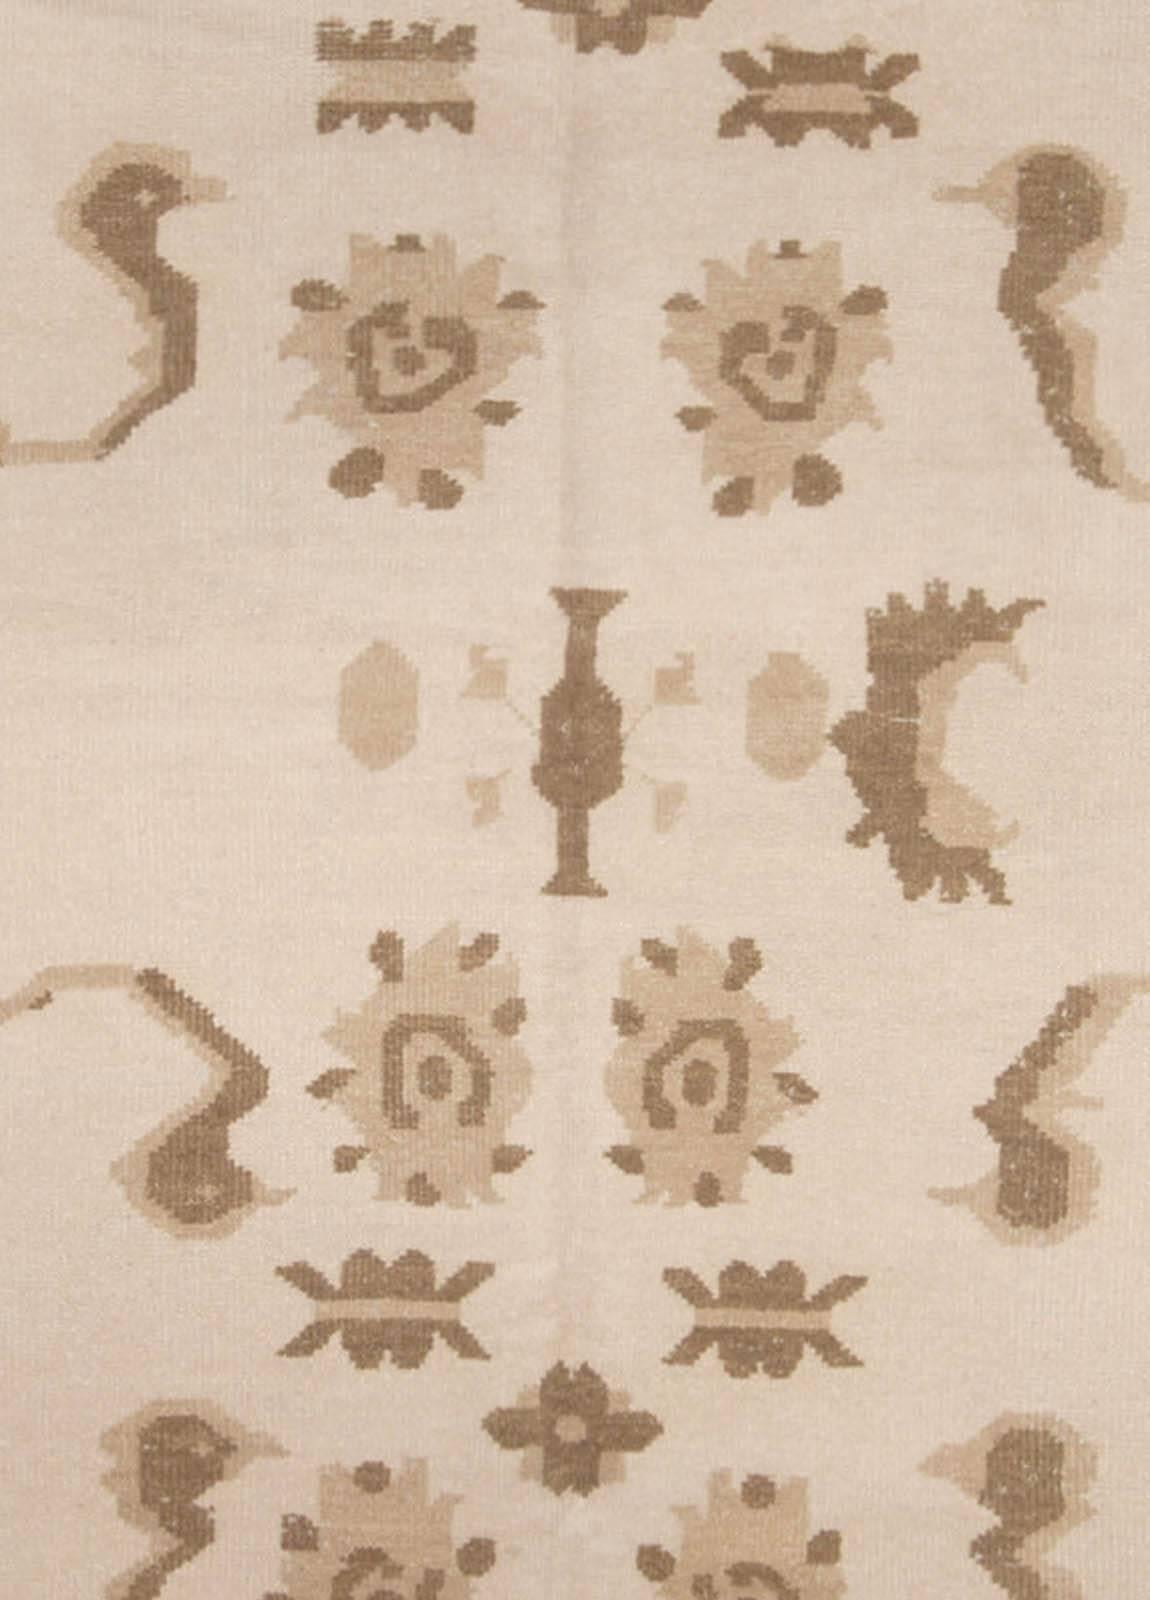 Modern Oushak Design beige and brown handmade wool rug by Doris Leslie Blau
Size: 12'2